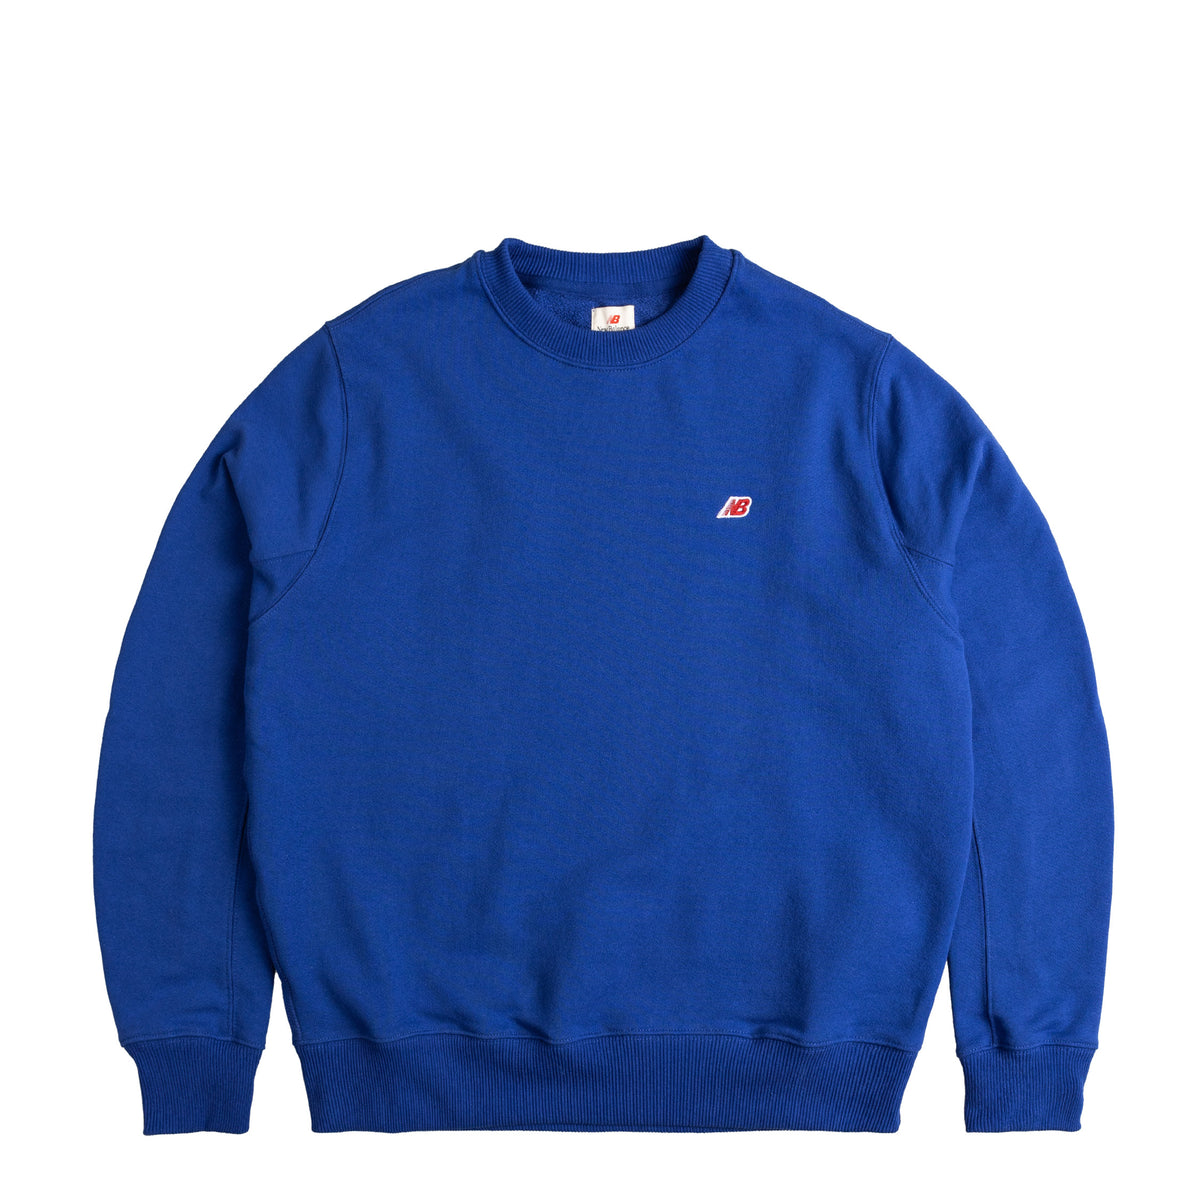 New Balance Made in USA Core Sweatshirt » Buy online now!